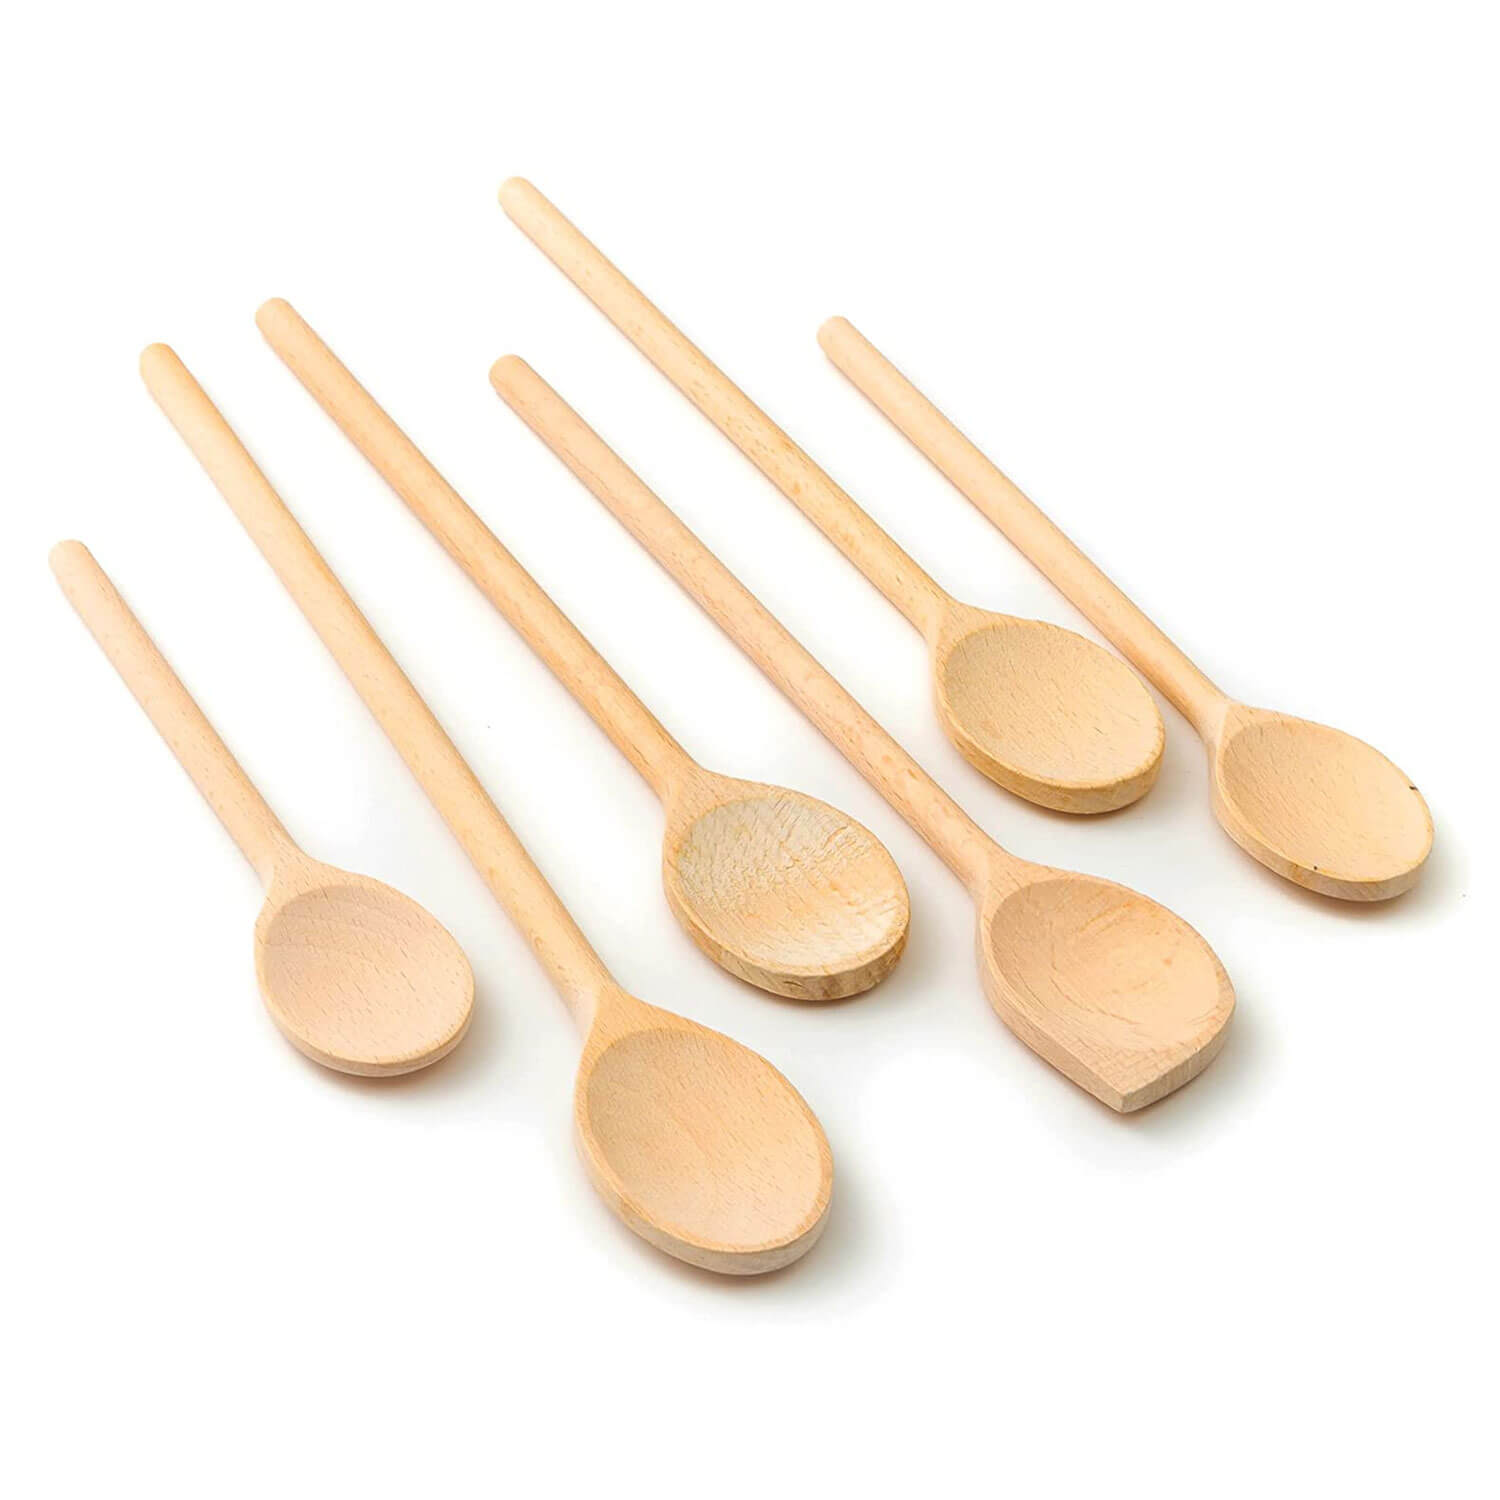 https://cdn.shopify.com/s/files/1/0515/2440/3381/products/6-piece-wooden-kitchen-spoon-set-20cm-35cm-tuuli-422.jpg